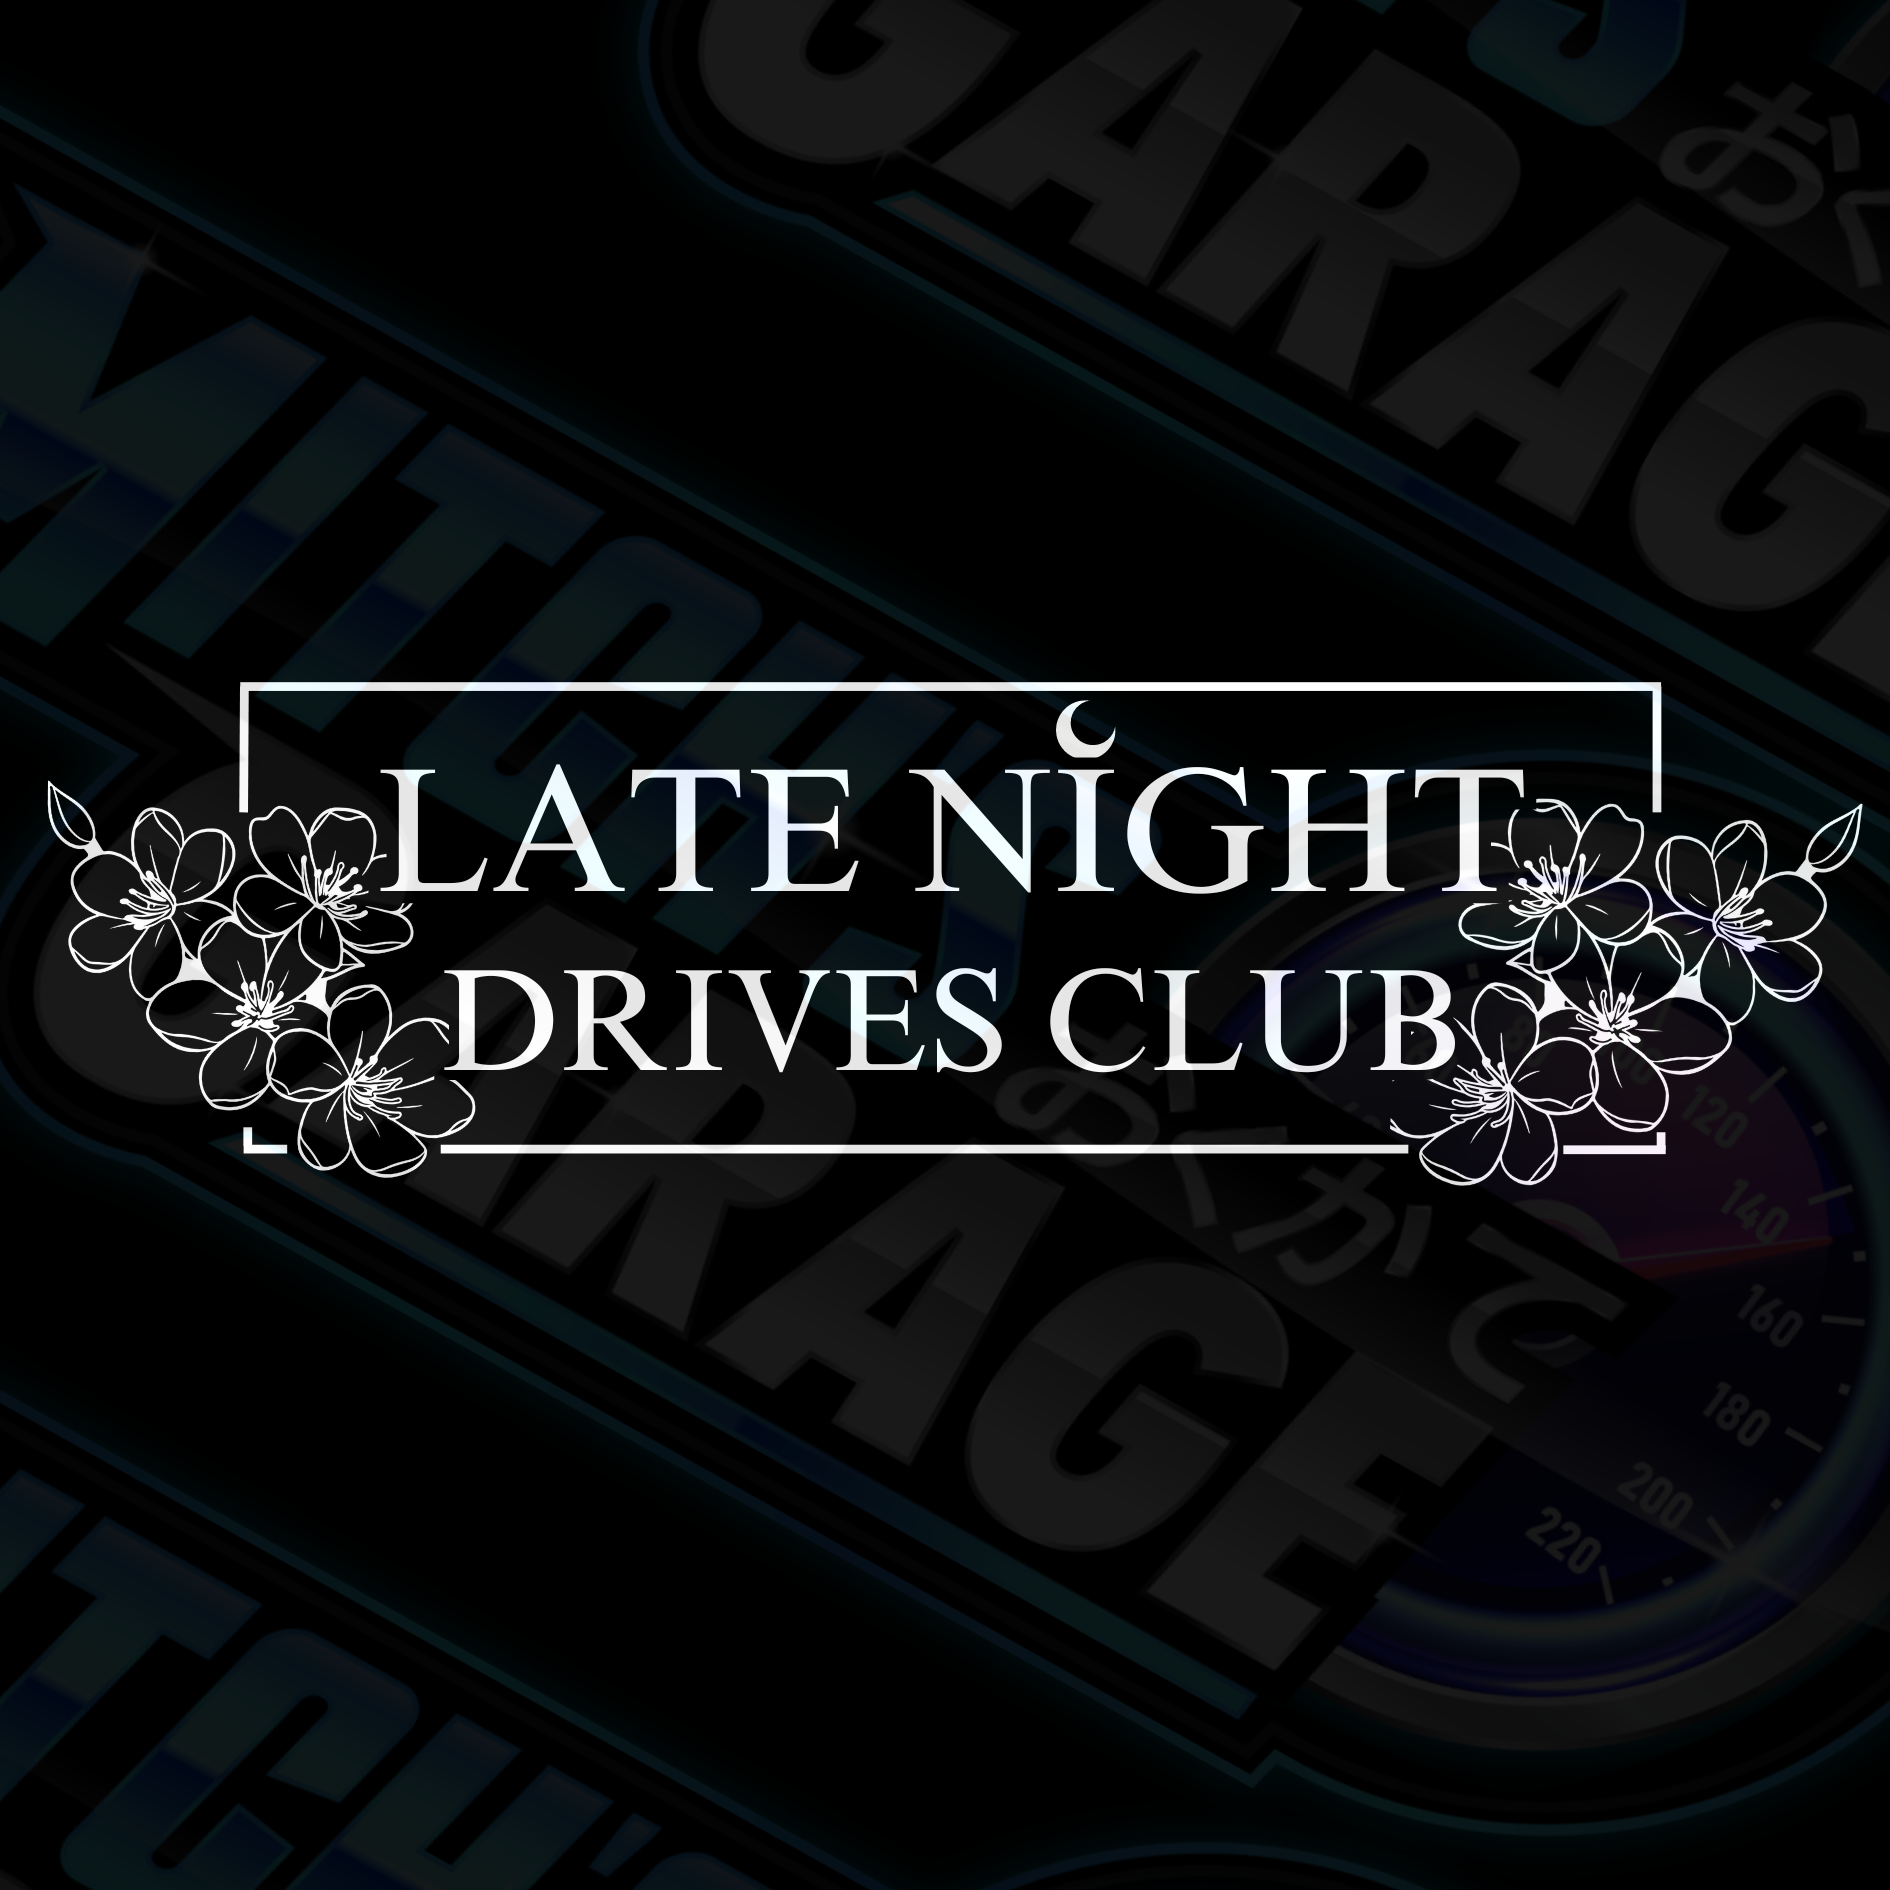 Late Night Drivers Club Vinyl Decal